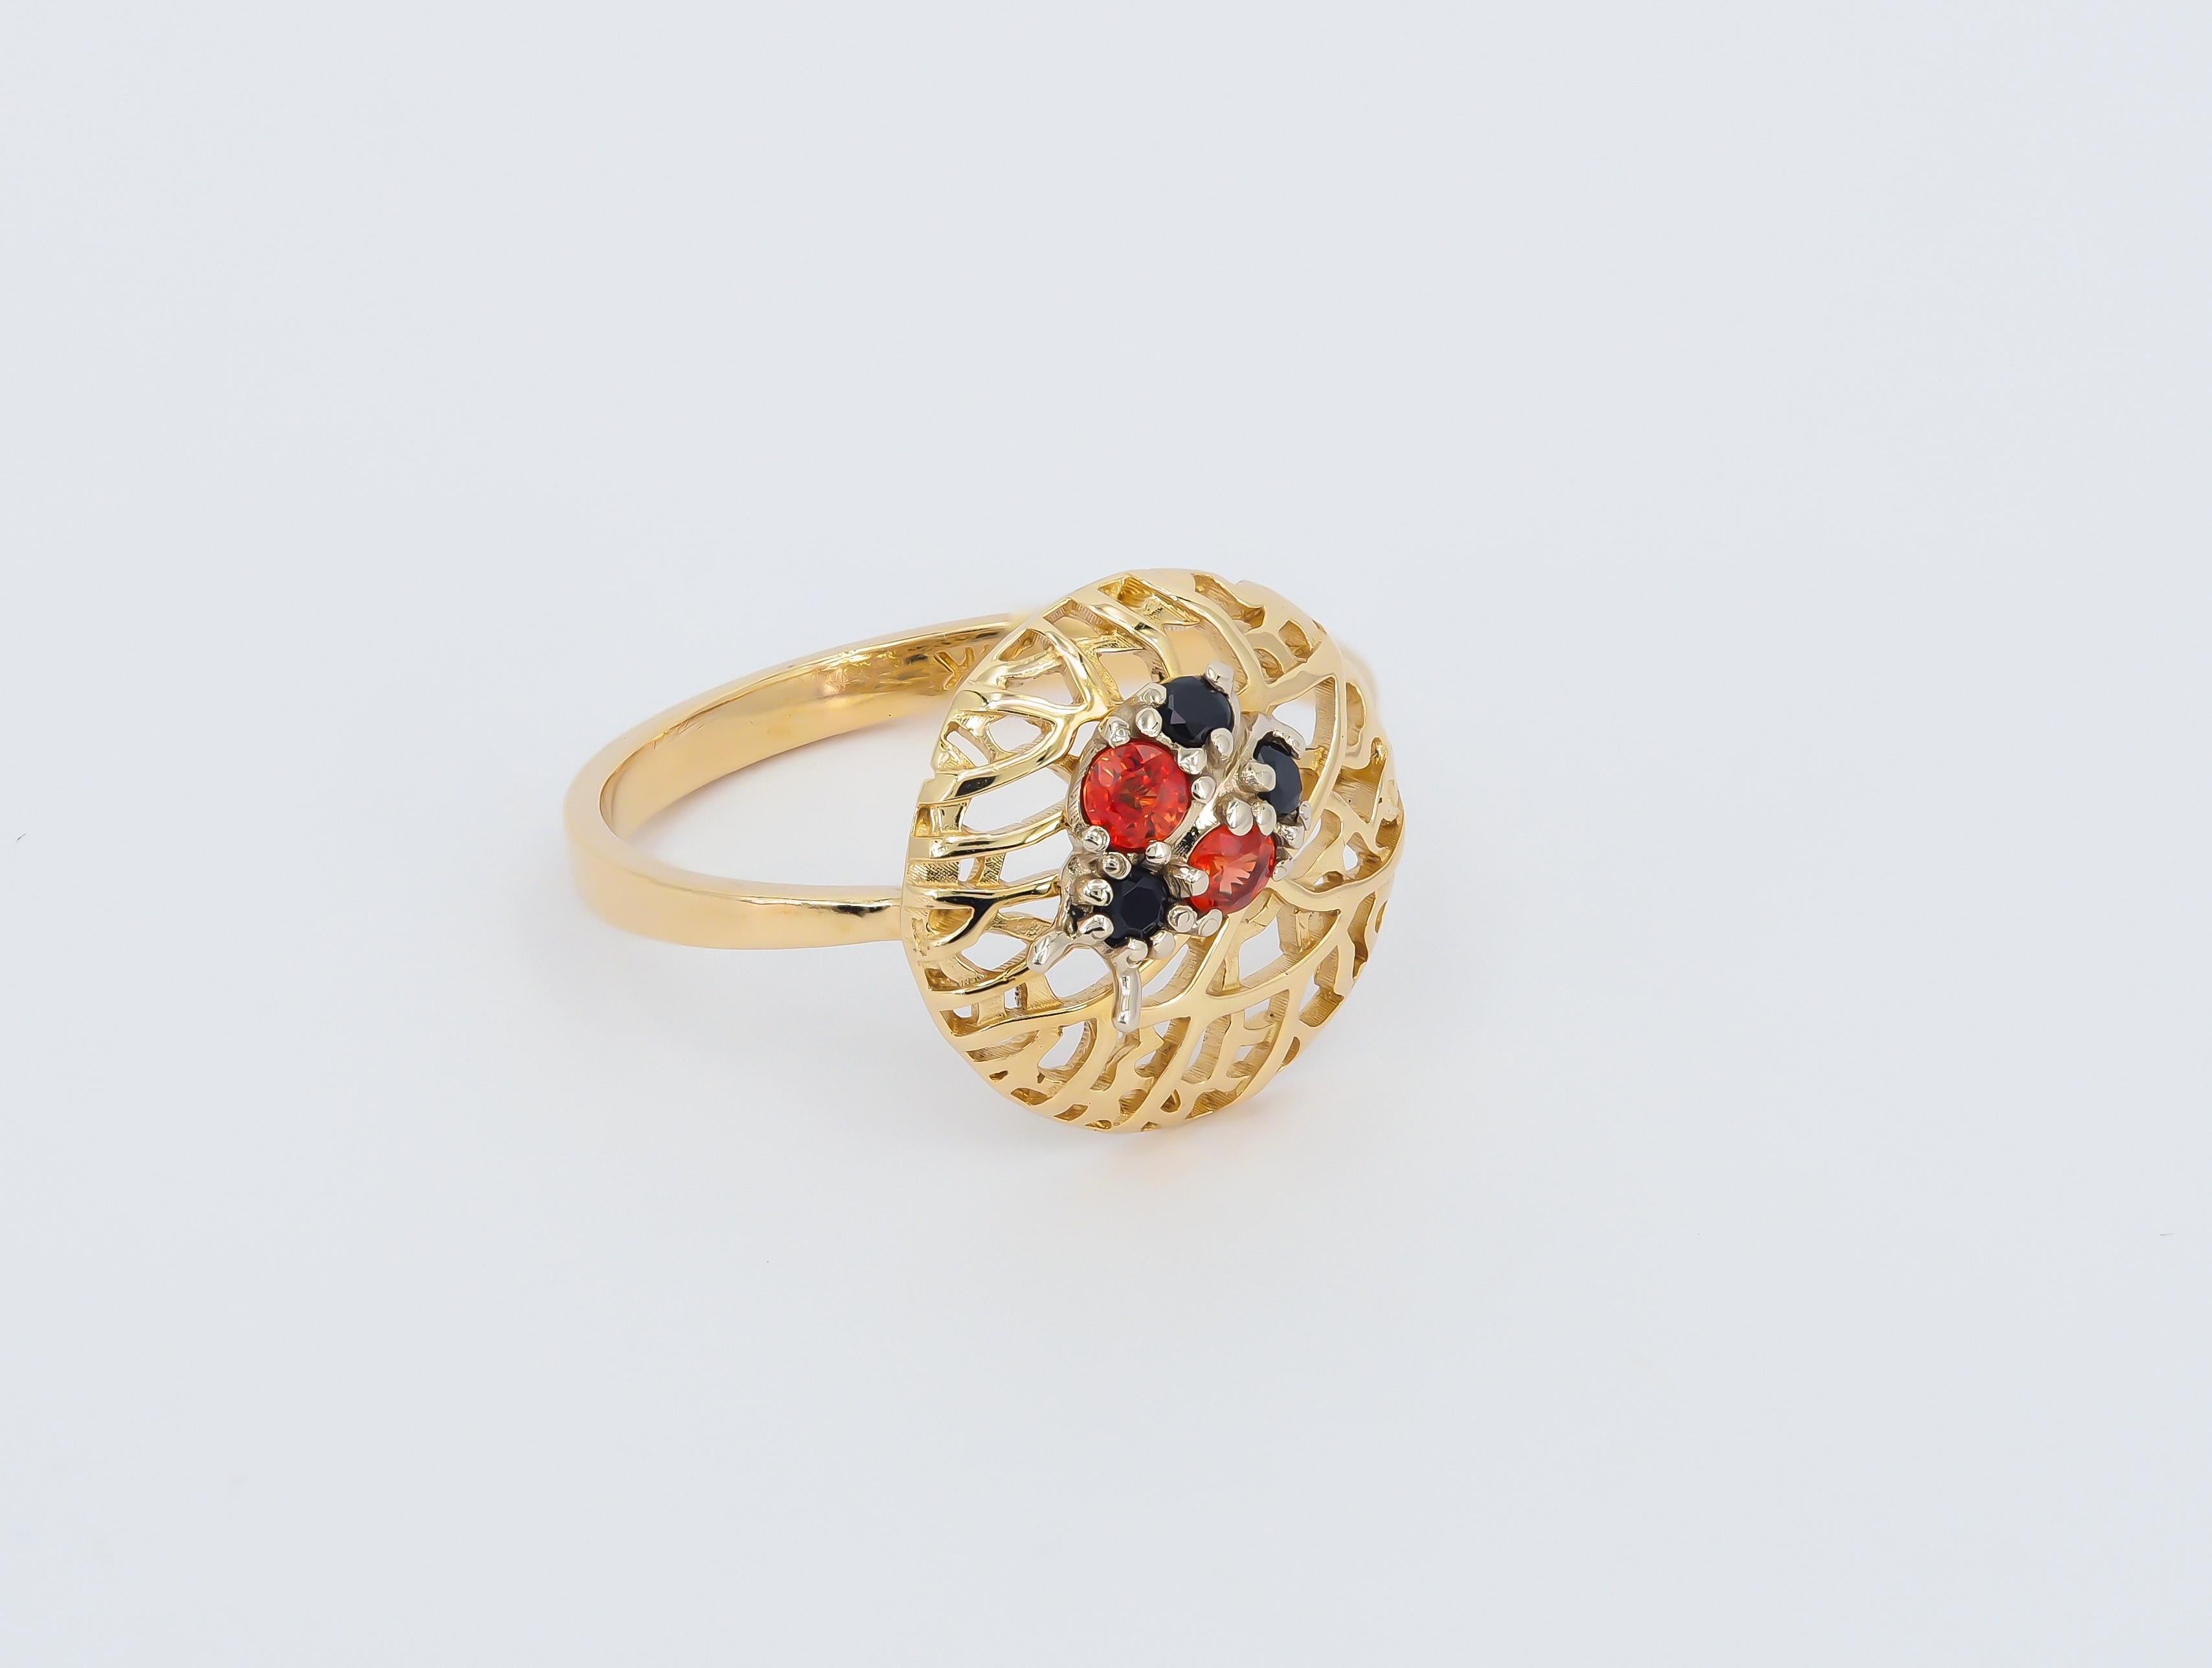 For Sale:  14 karat Gold Ring with Sapphires, Spinels. Ladybug gold Ring. 3